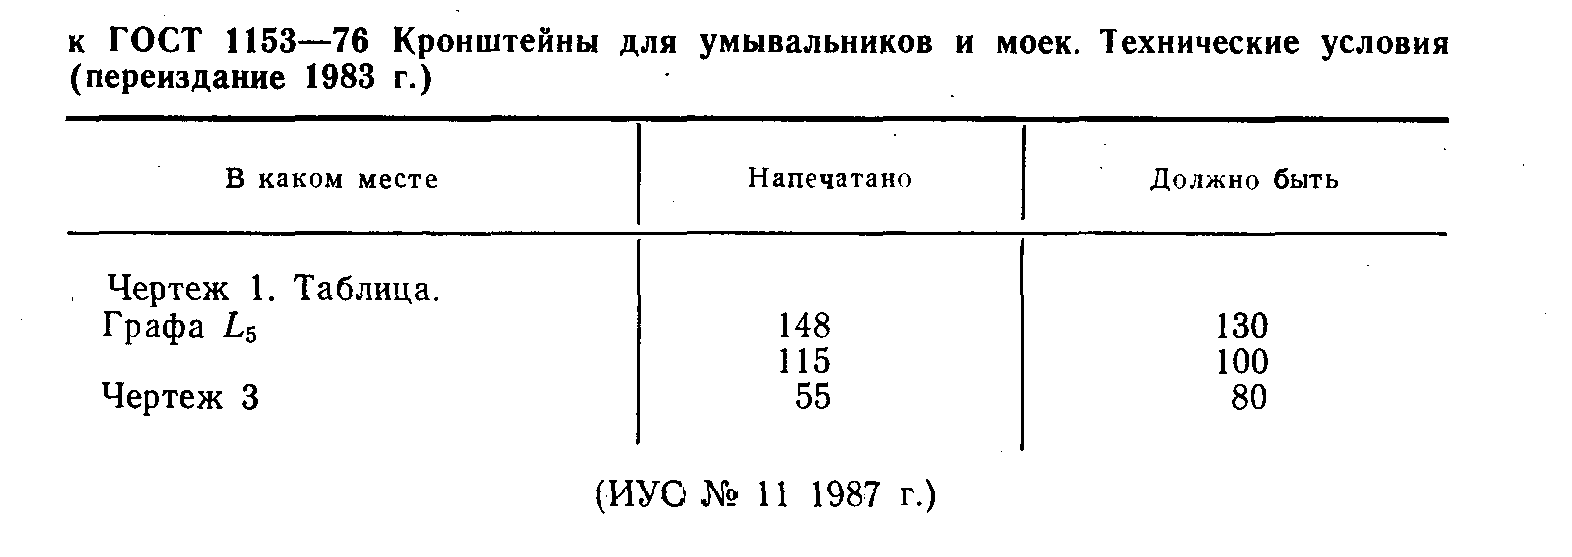 ГОСТ 1153-76